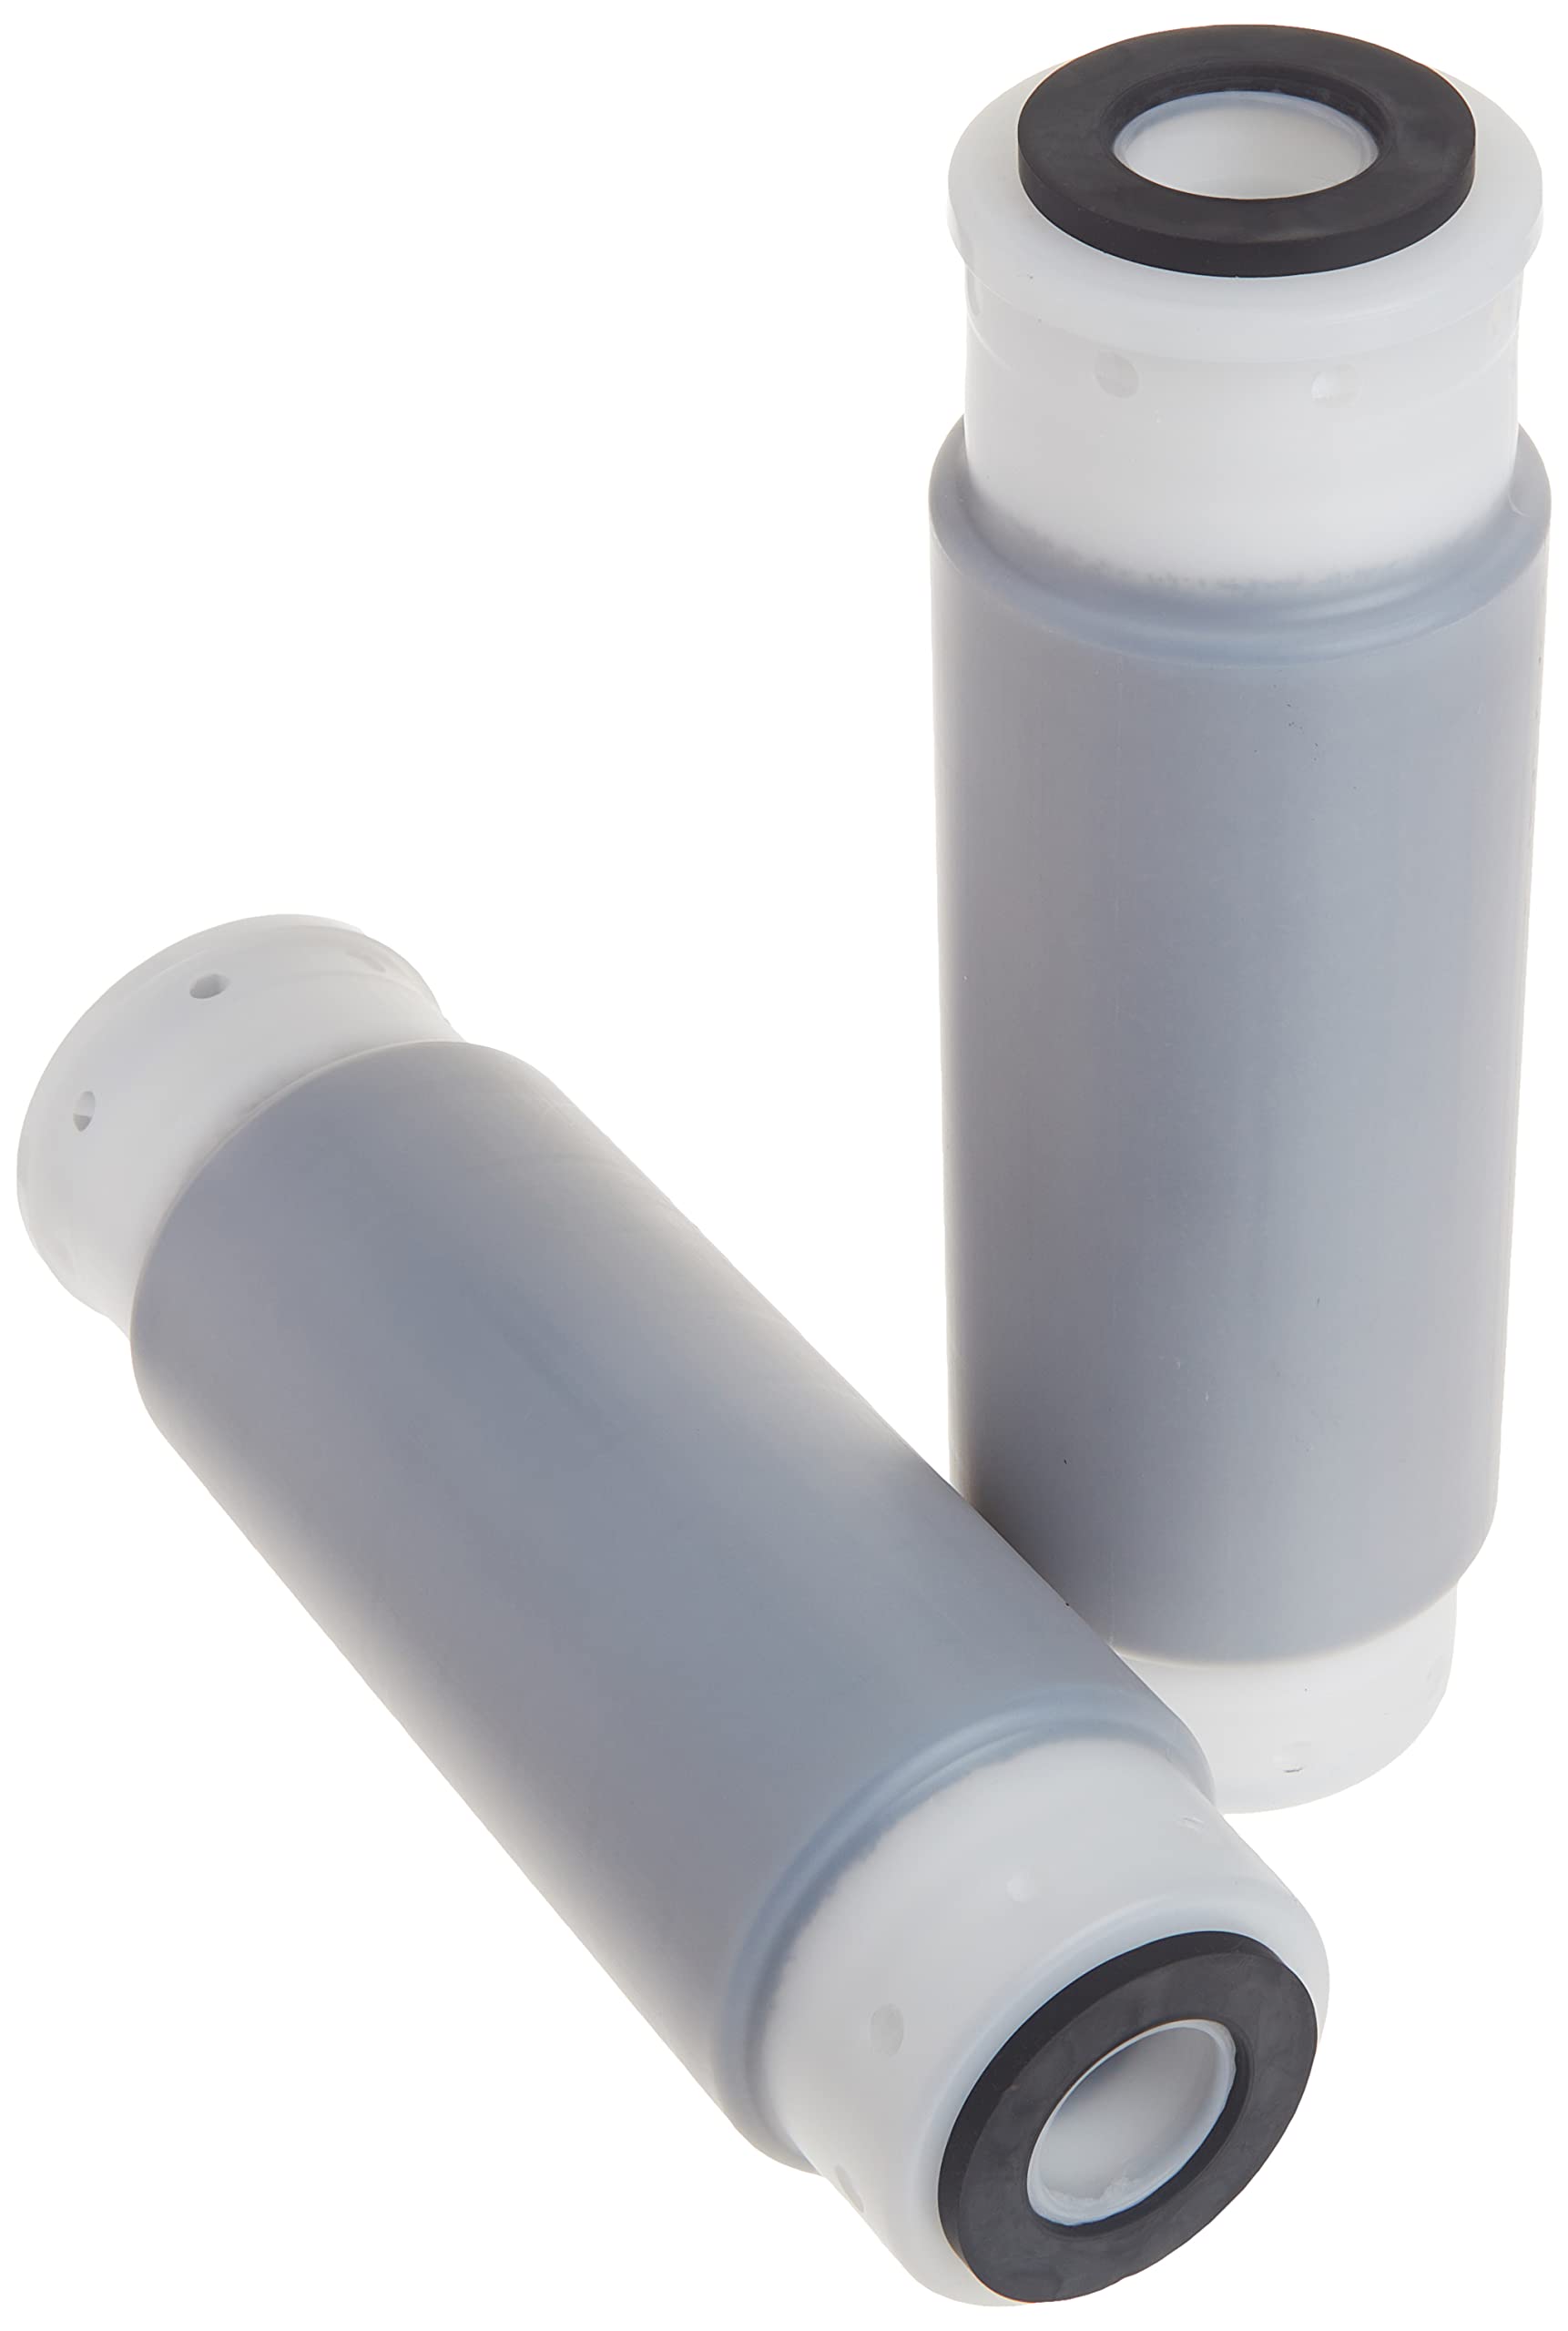 3M Aqua-Pure - 70020318526 AP1 Whole House Standard Sump Replacement Water Filter Drop-in Cartridge AP117NP, 5541731, 2 Per Case, 1-(Pack), Gray